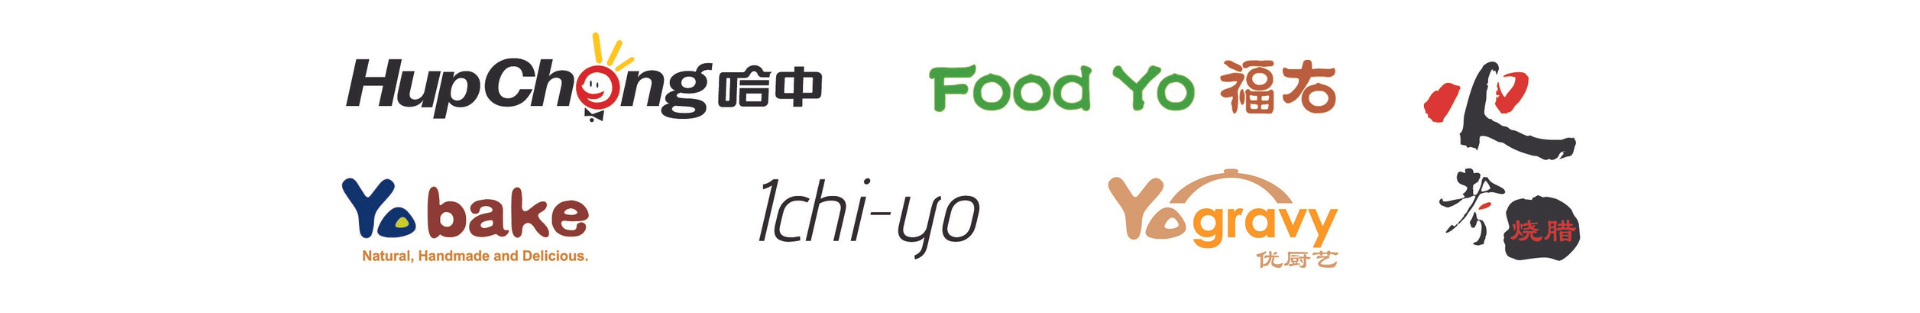 Chop Hup Chong Food Yo Yobake Yogravy 1chi-yo Brand Logo